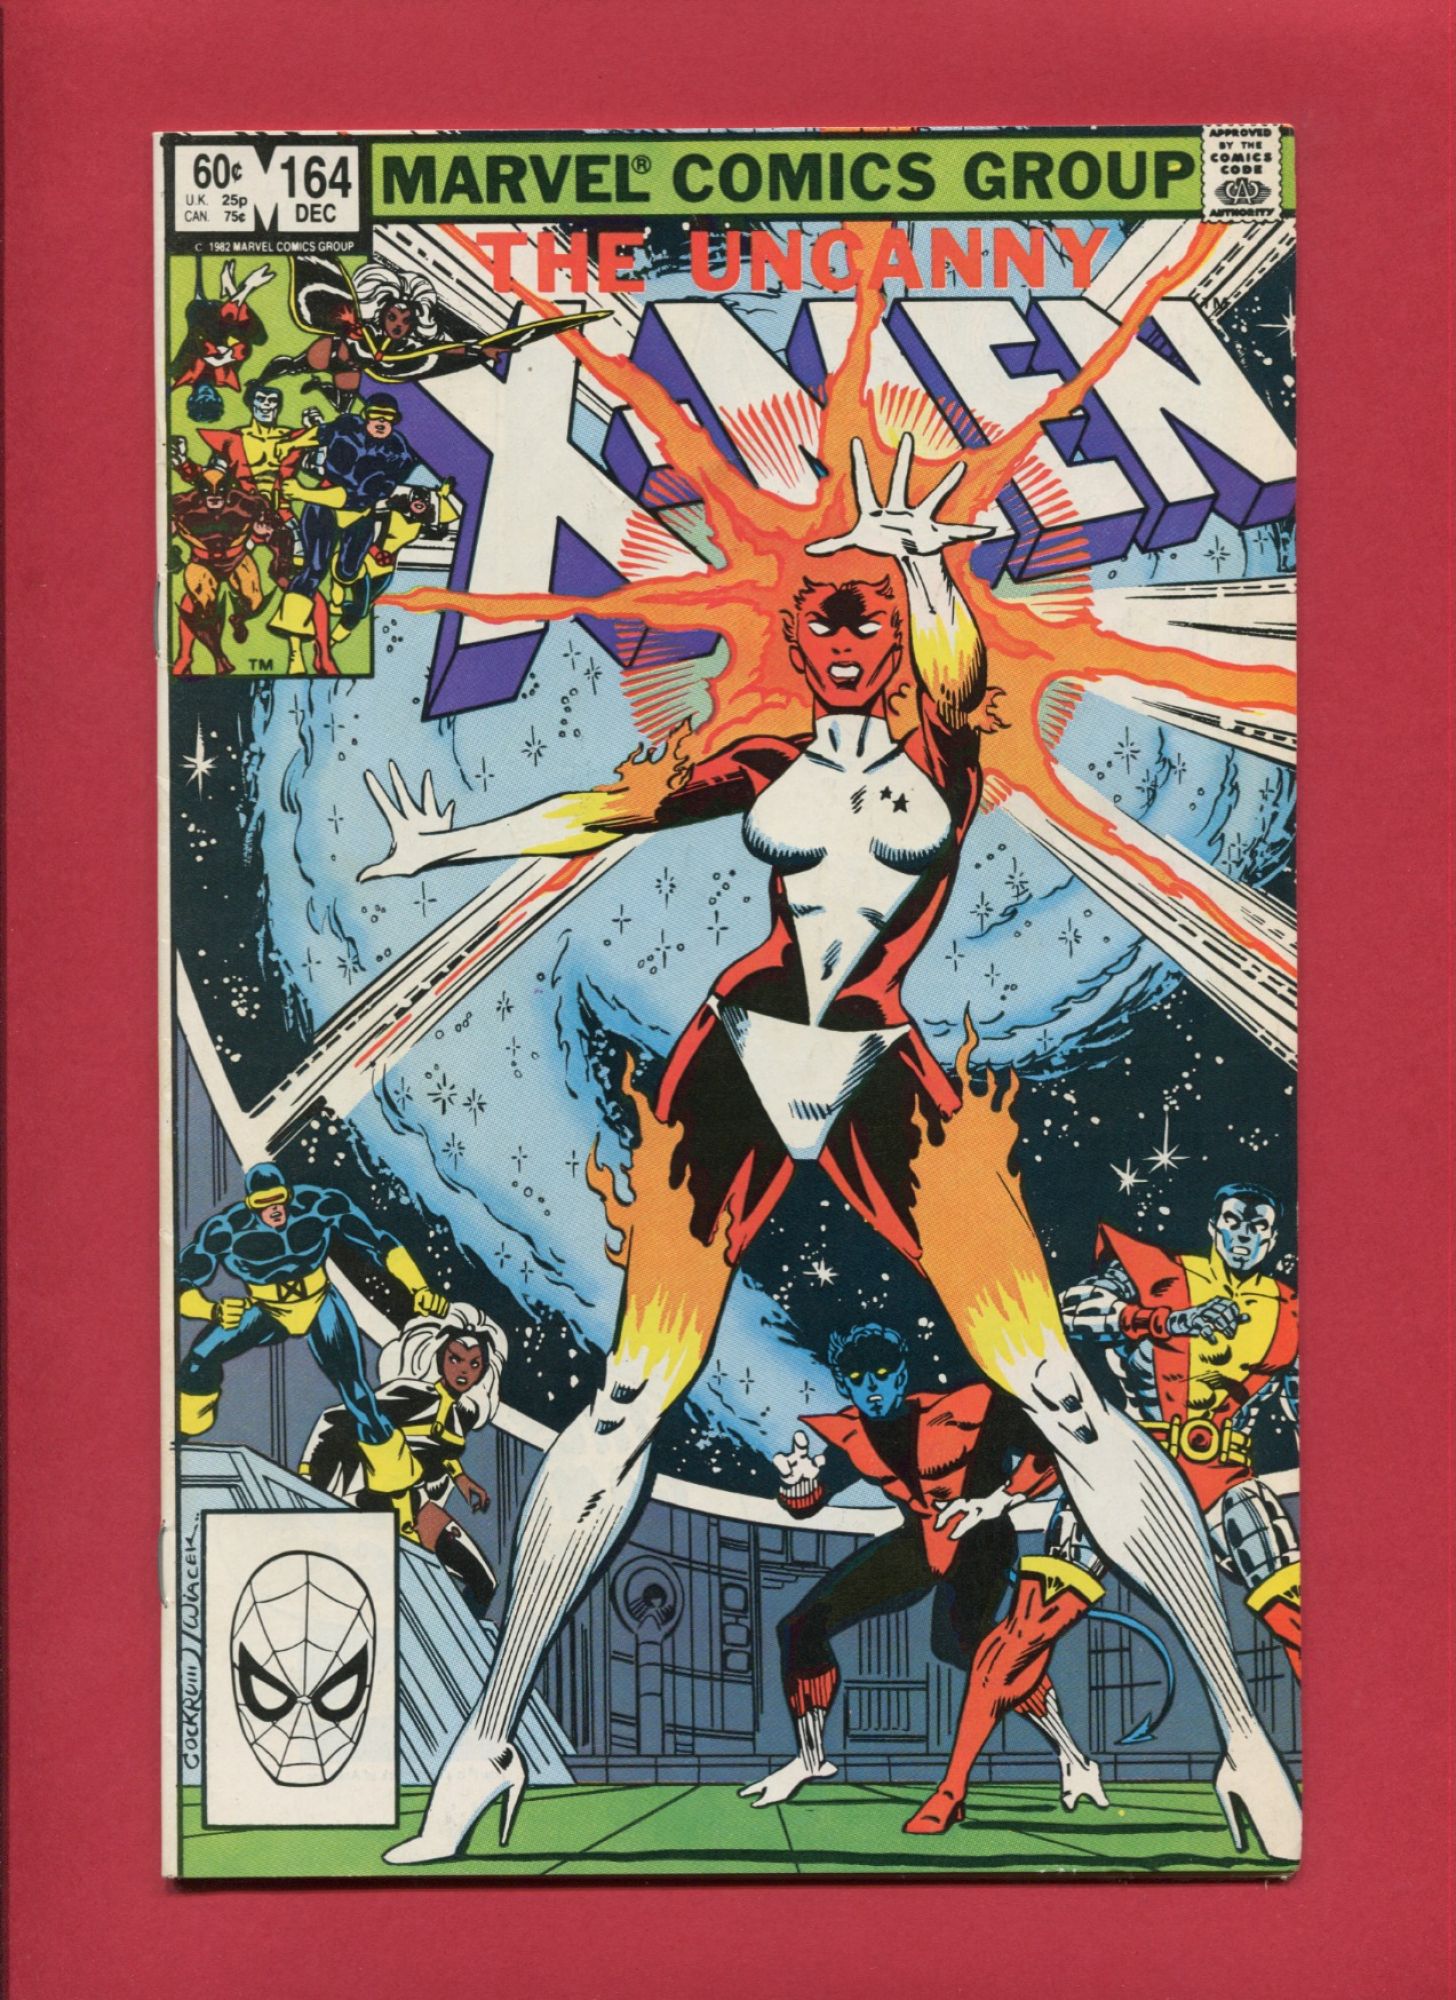 Uncanny X-Men (Volume 1 1963) #164, Dec 1982, Marvel :: Iconic Comics ...